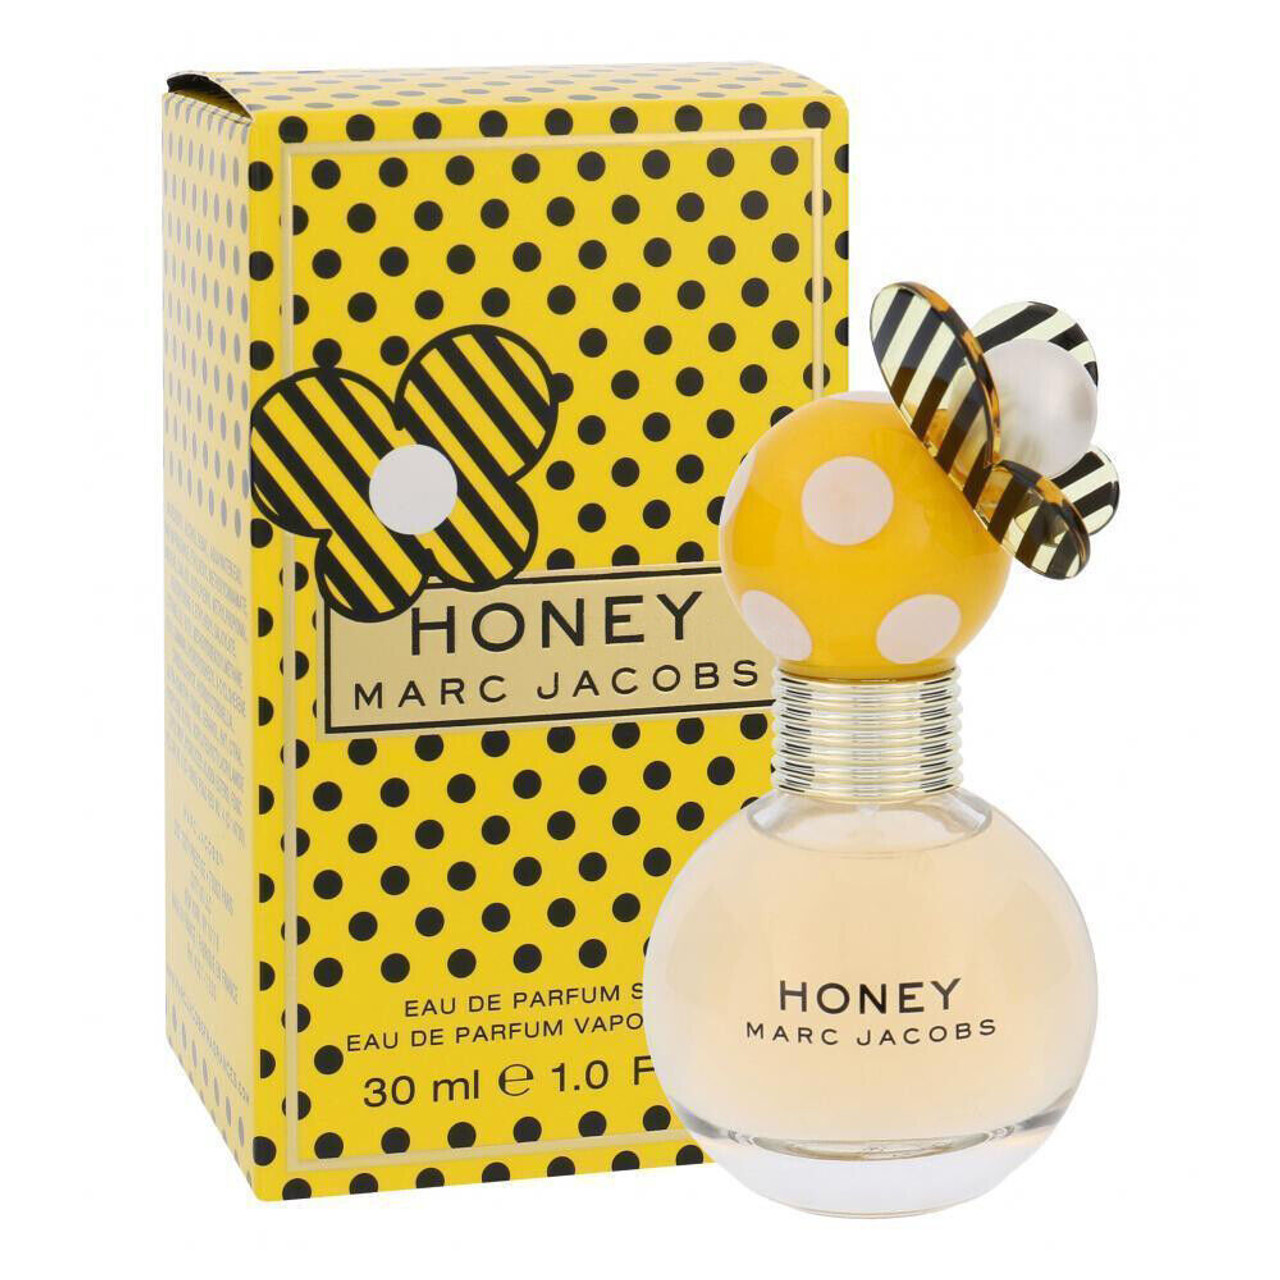 Honey by Marc Jacobs - Women's Perfume - Perfumery